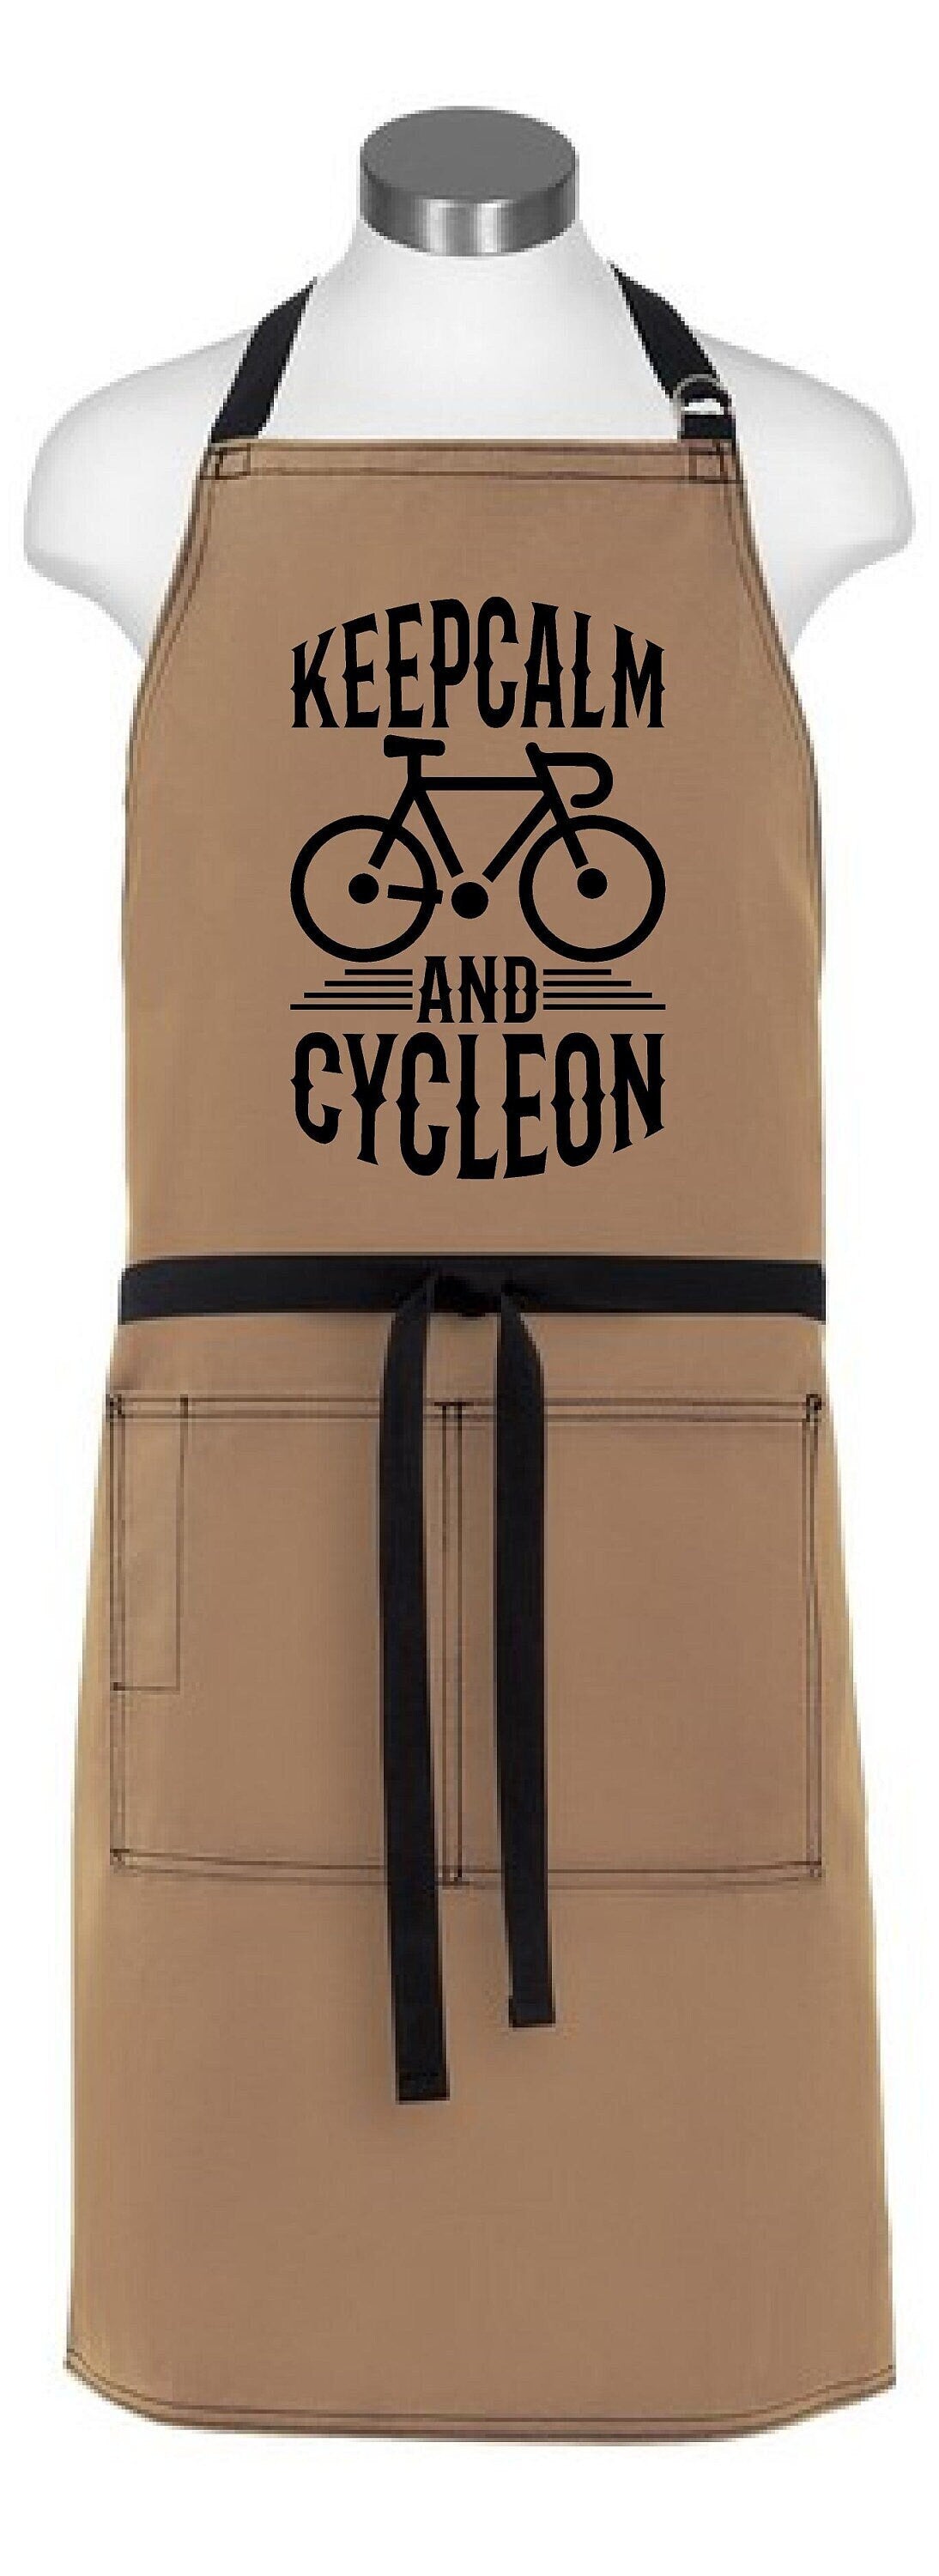 Keep Calm and Cycle on - Bike Mechanic Cotton Shop Apron | Men's Women's Unisex 2 Pocket Cycling Kitchen BBW Grill Apron